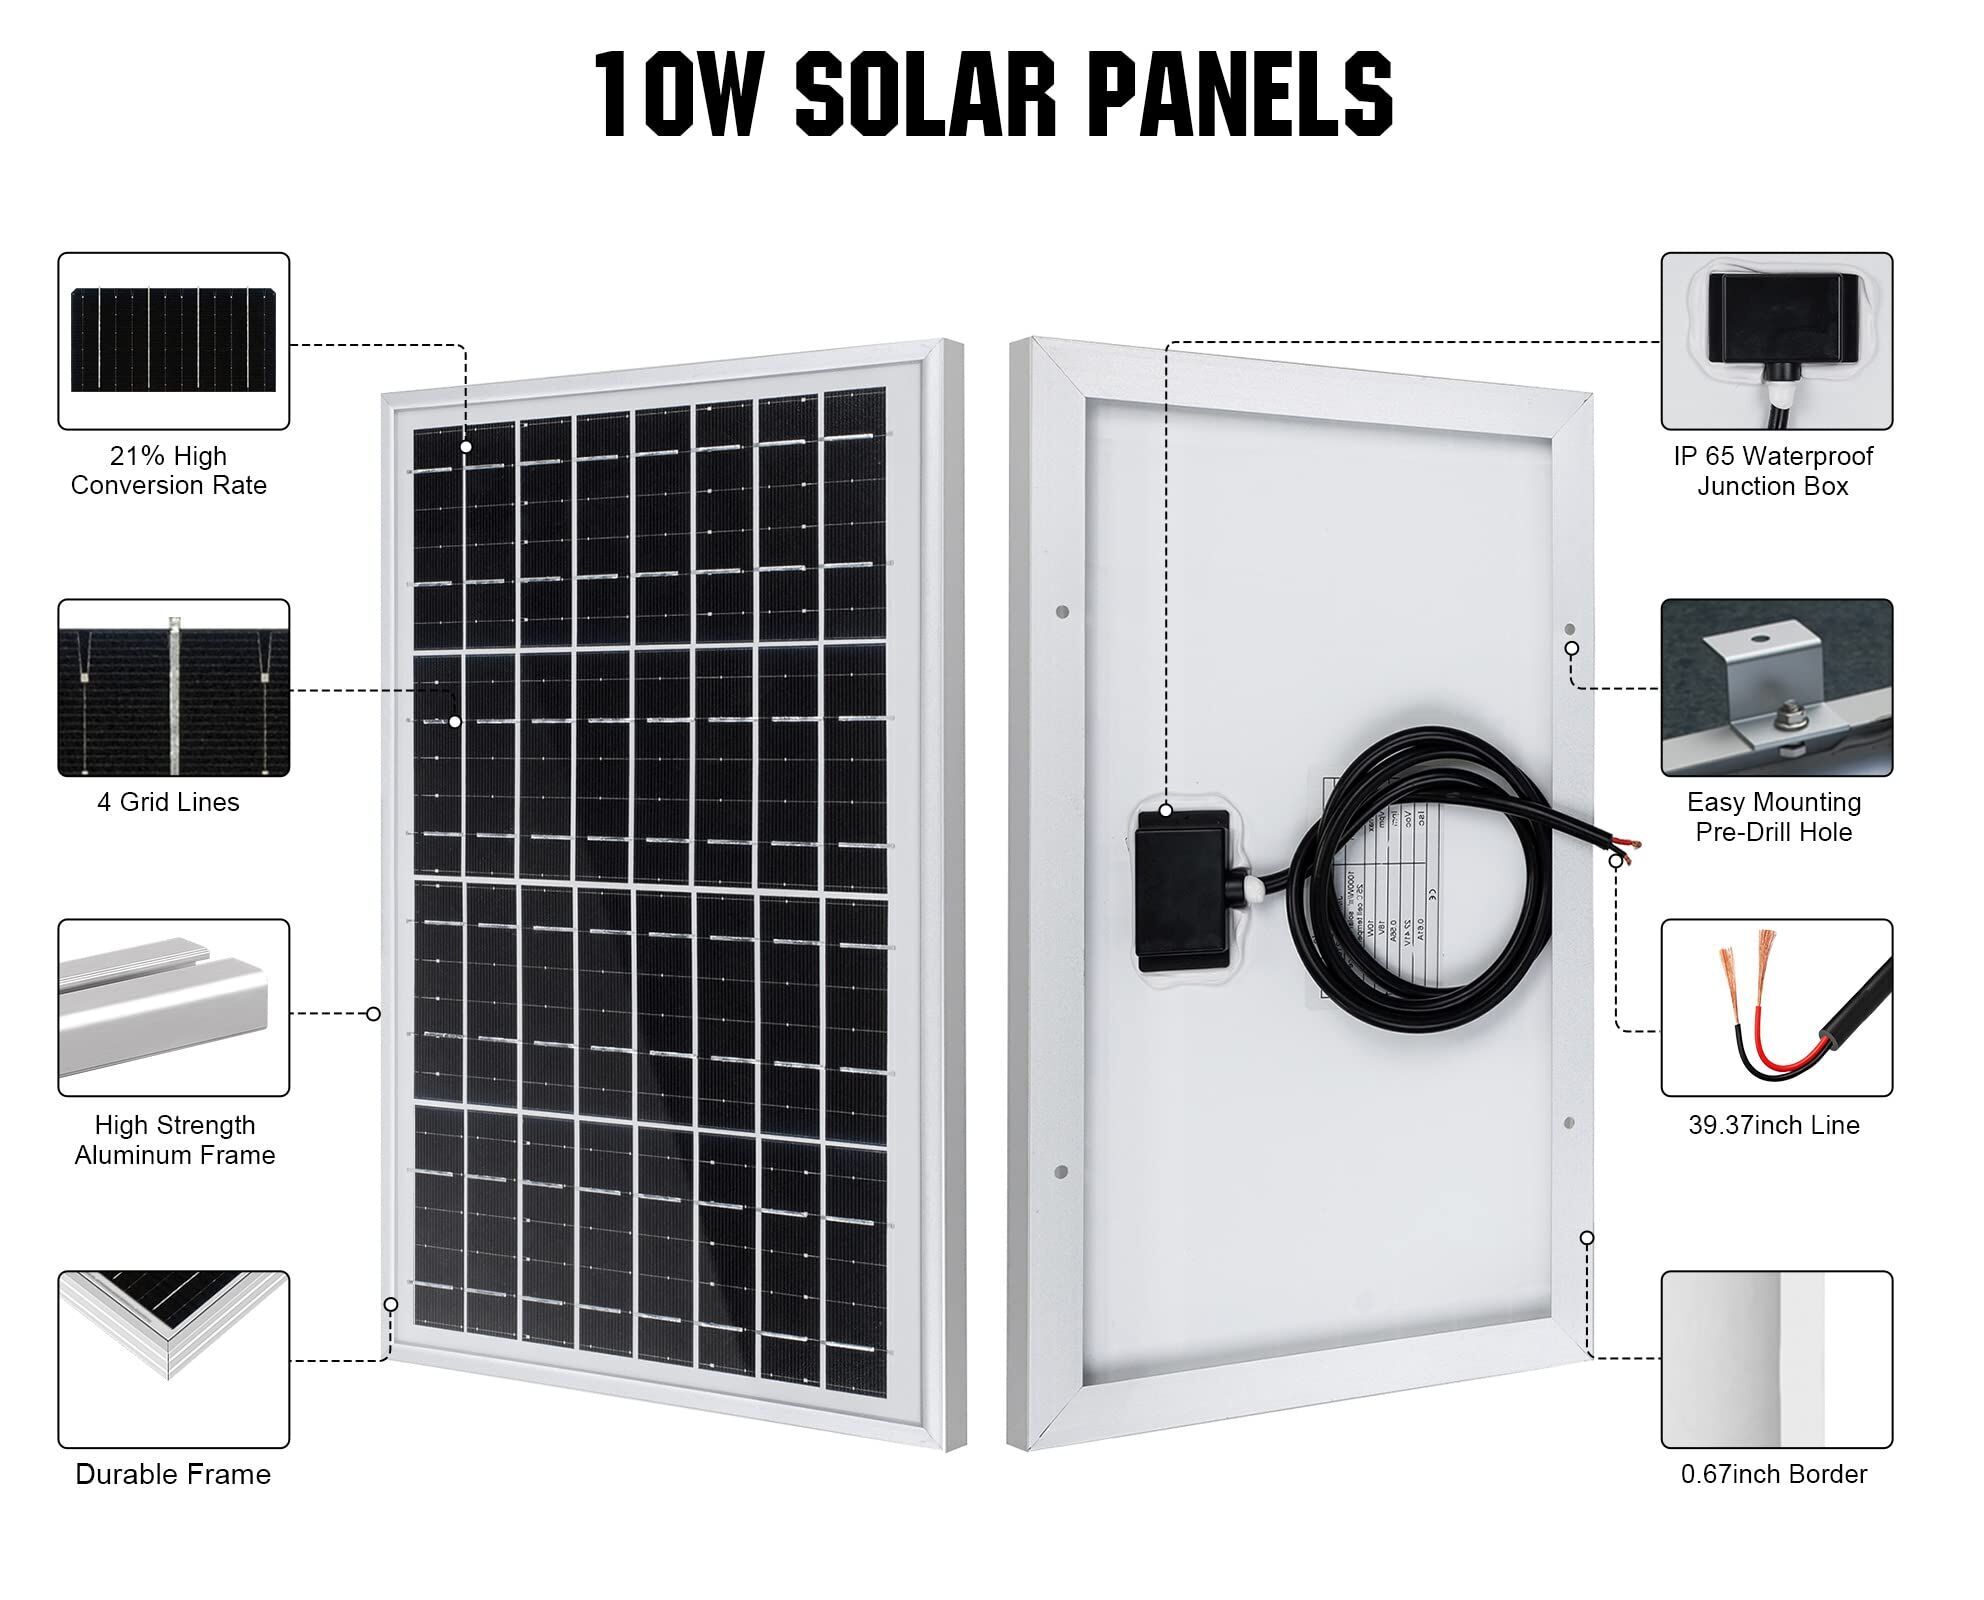 ECO-WORTHY Kit Solar 25W 12V: 1 Panel Solar 25W + 2 Cables de